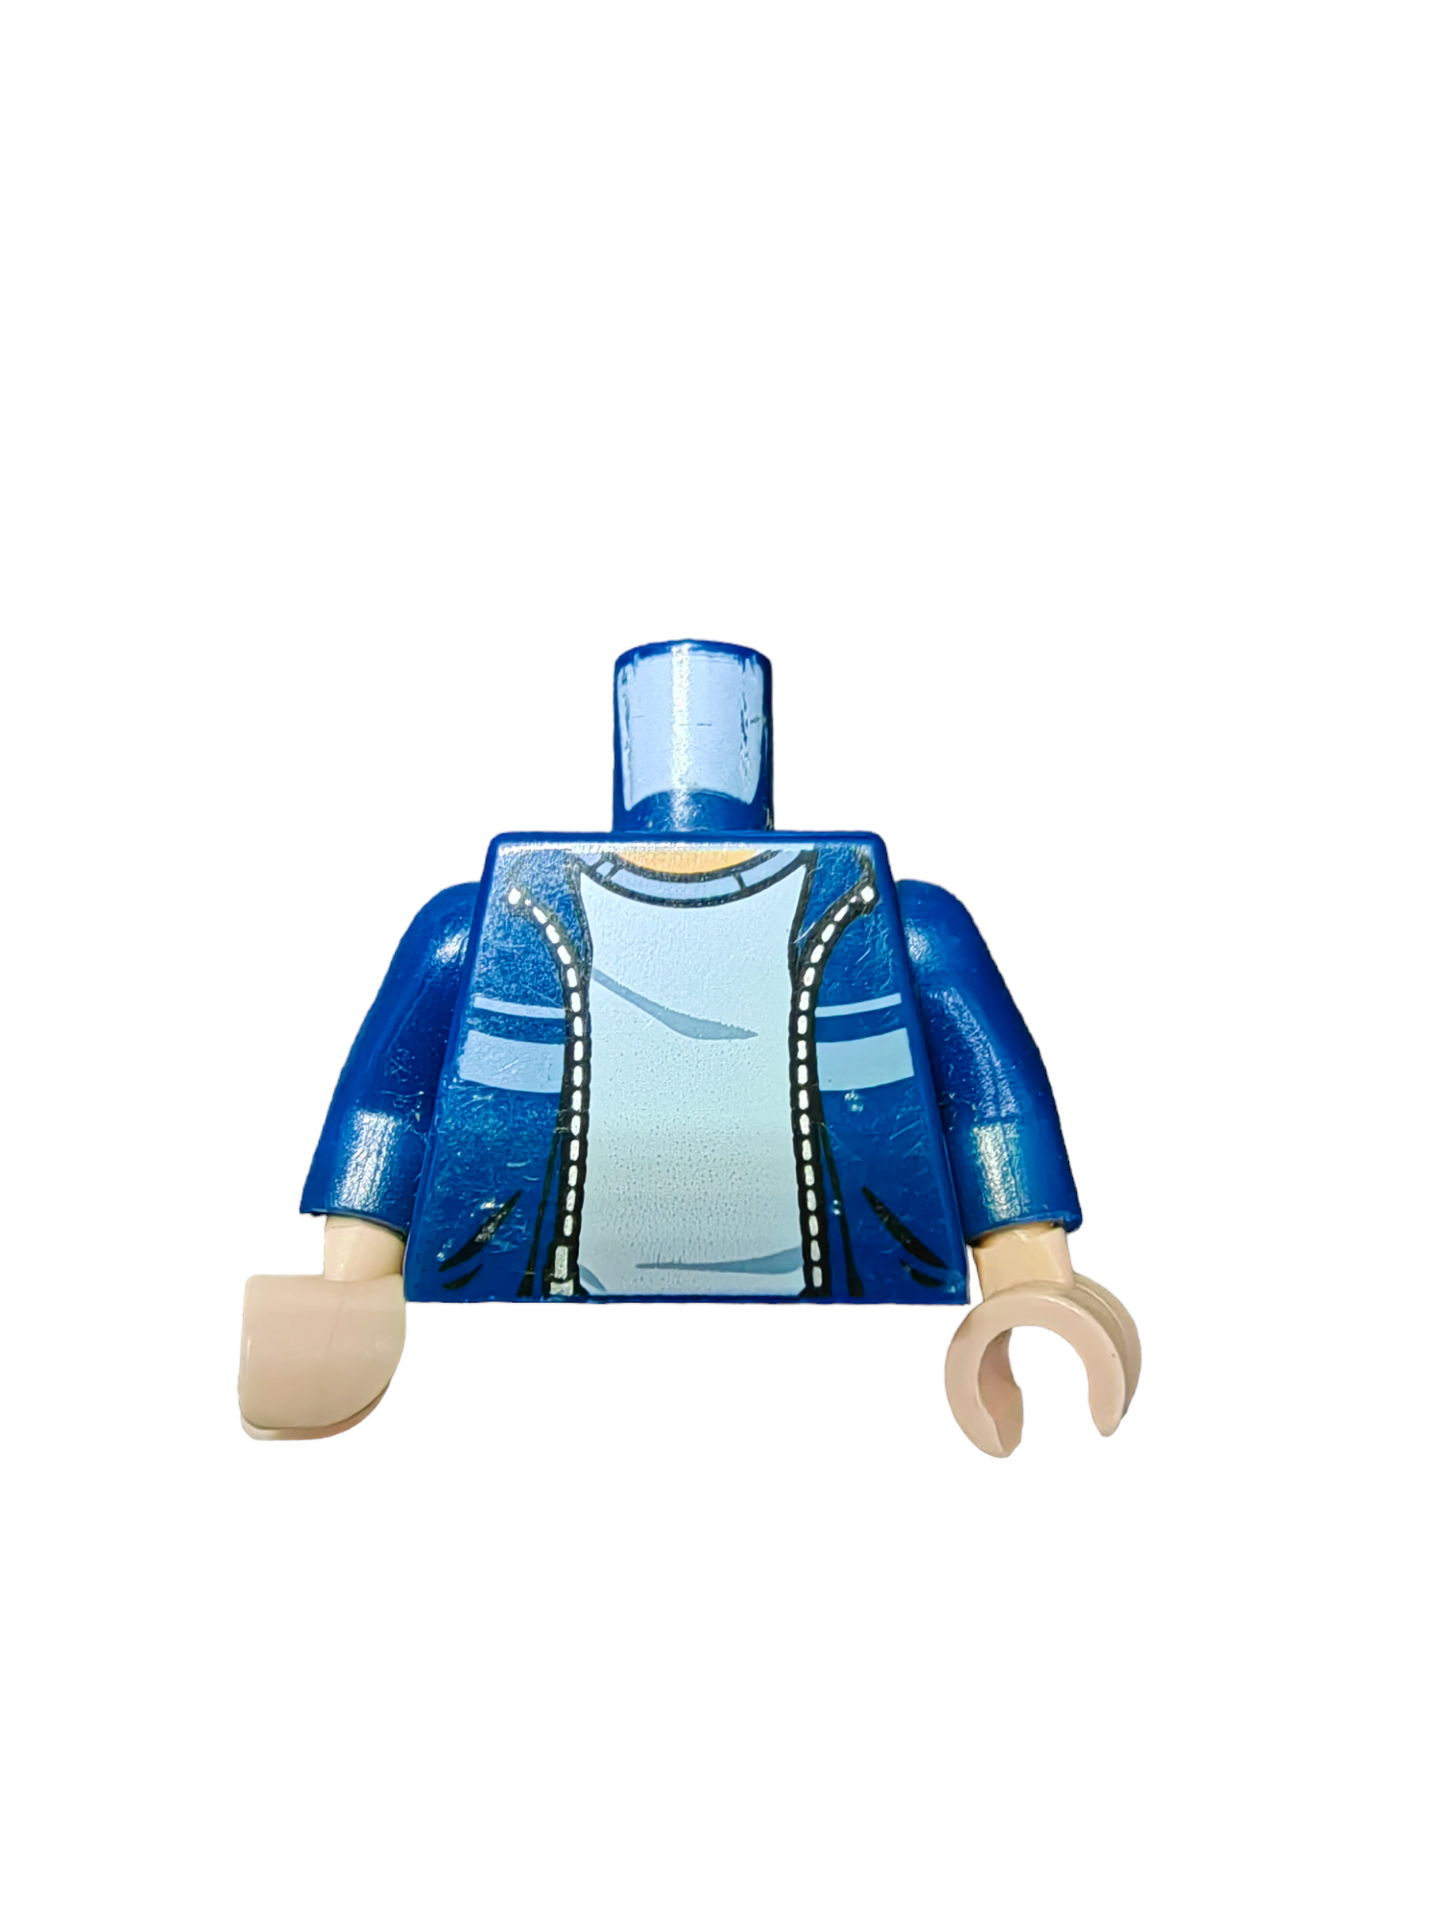 LEGO PRELOVED Minifigure Torso, Harry Potter Jacket with Gray Shirt - UB1438